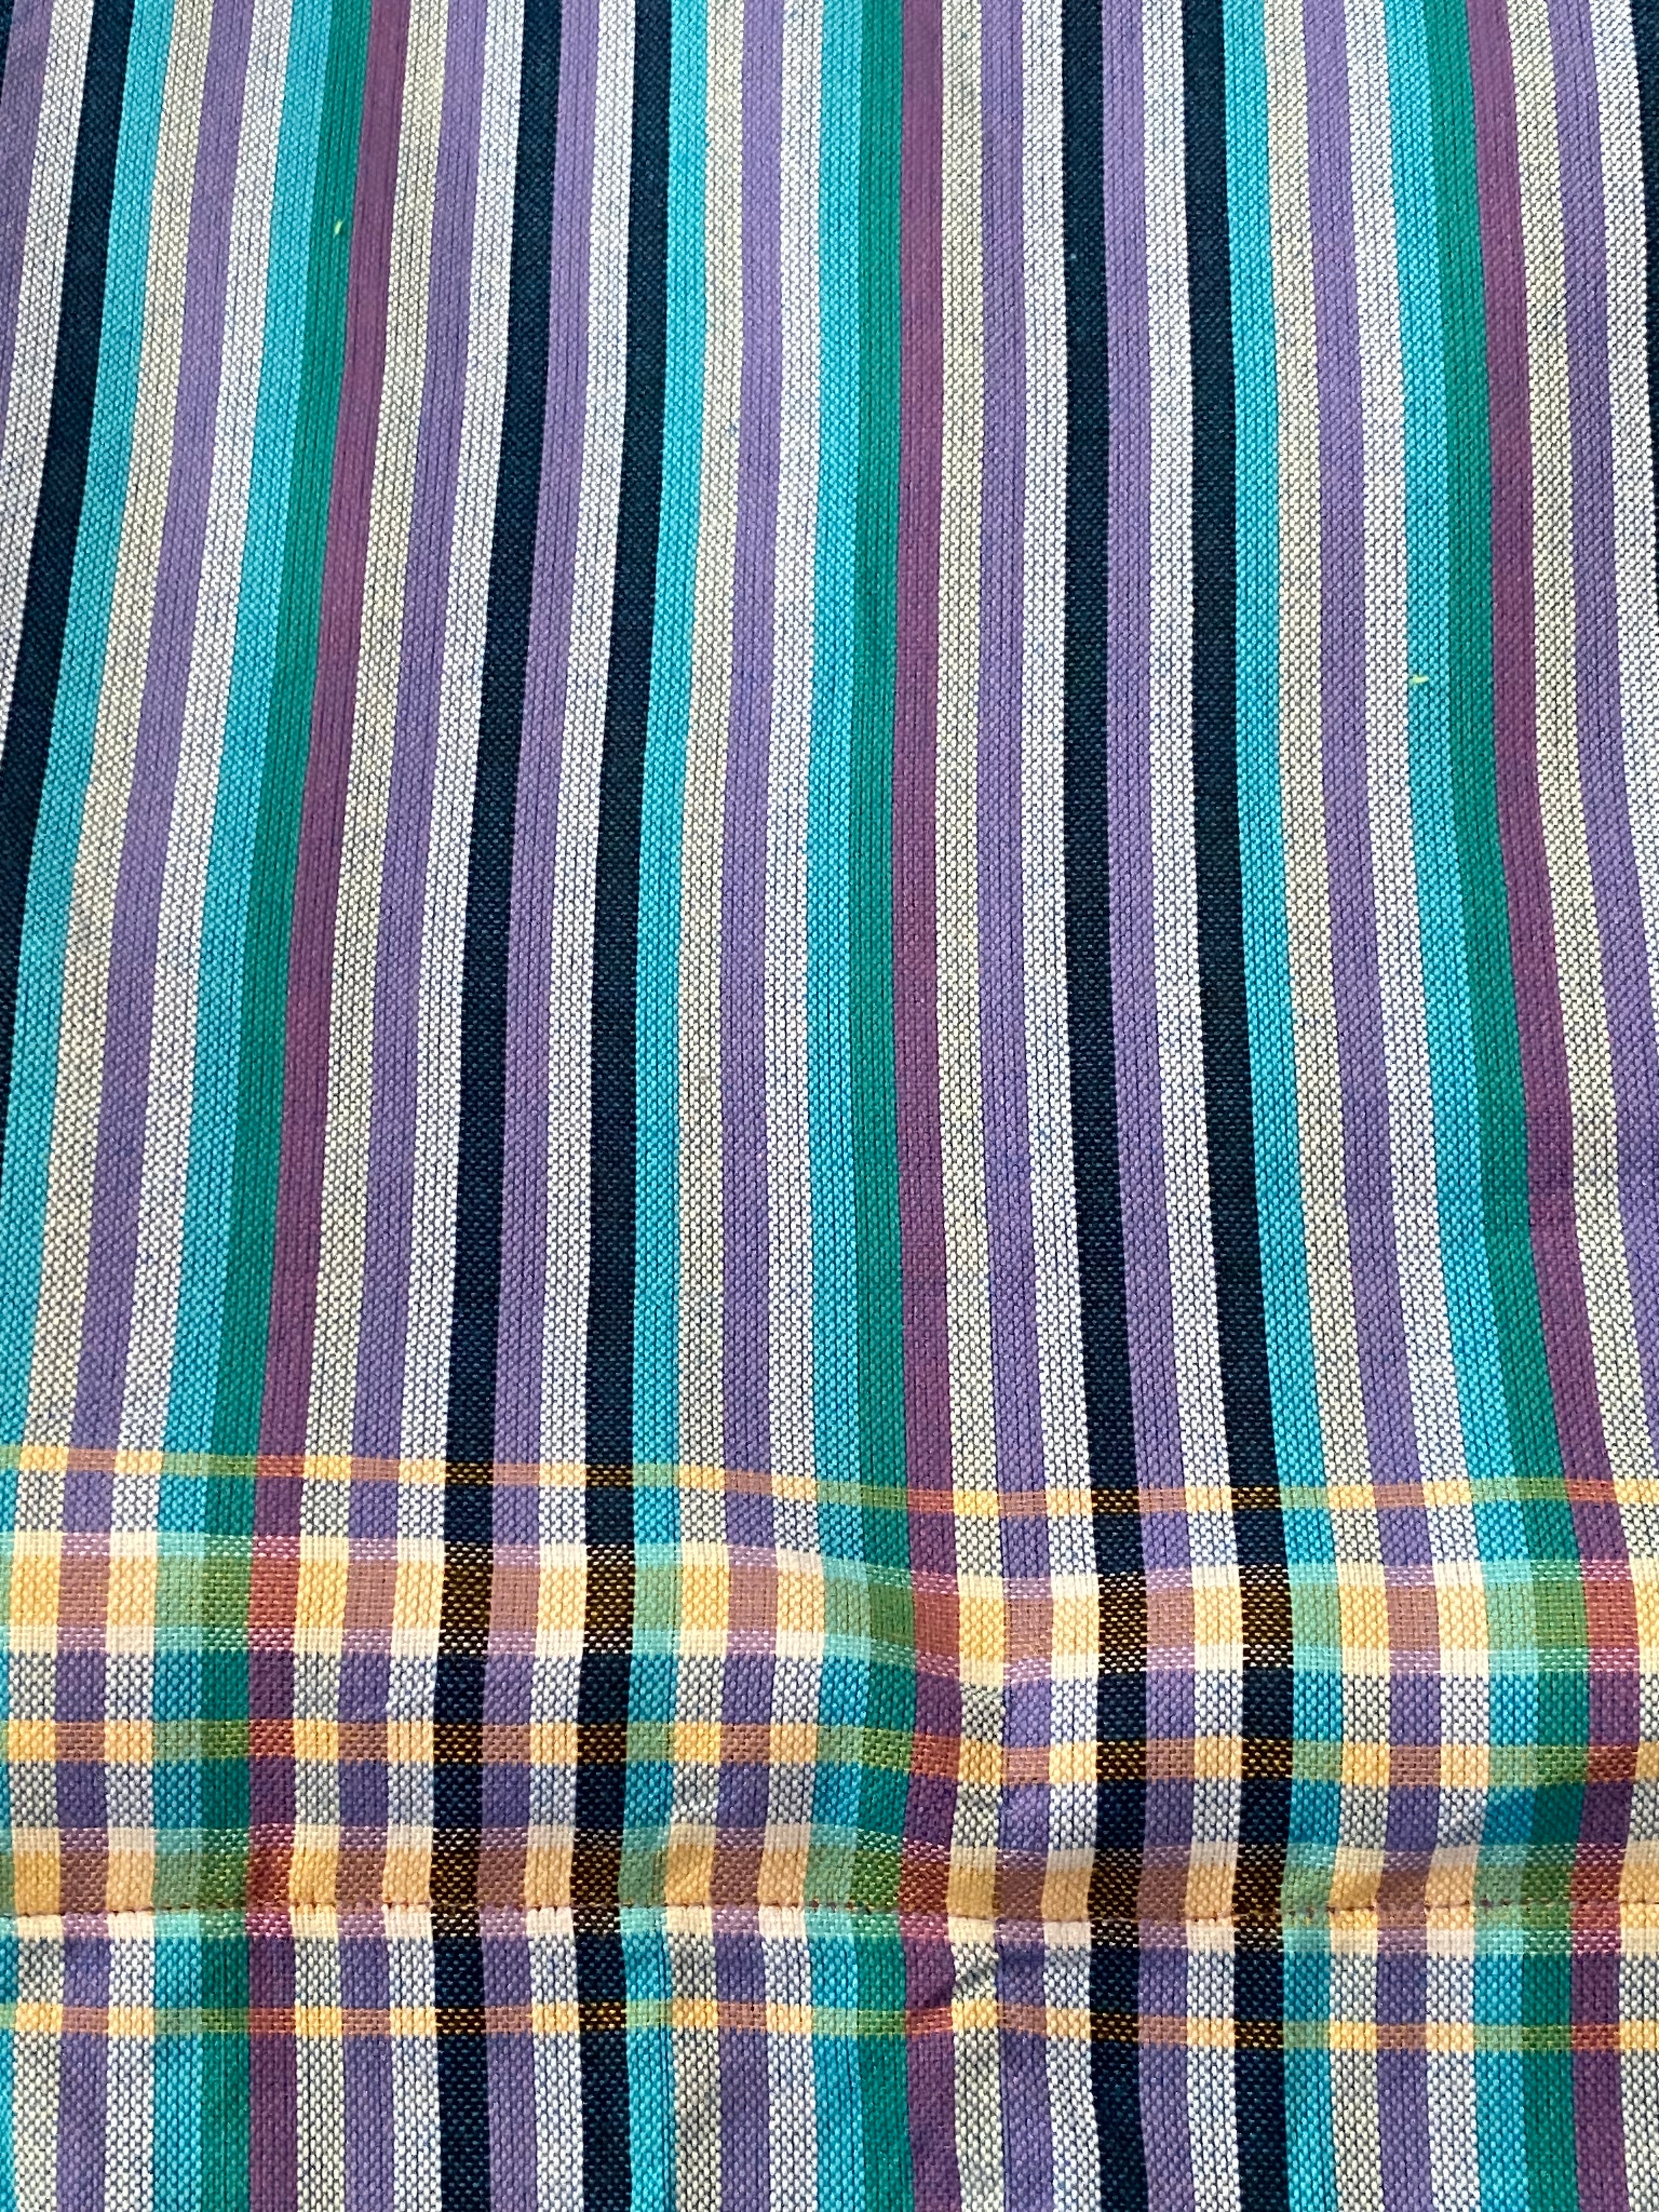 Kikoi Strandtuch long stripes  purple/light blue/black with purple towel